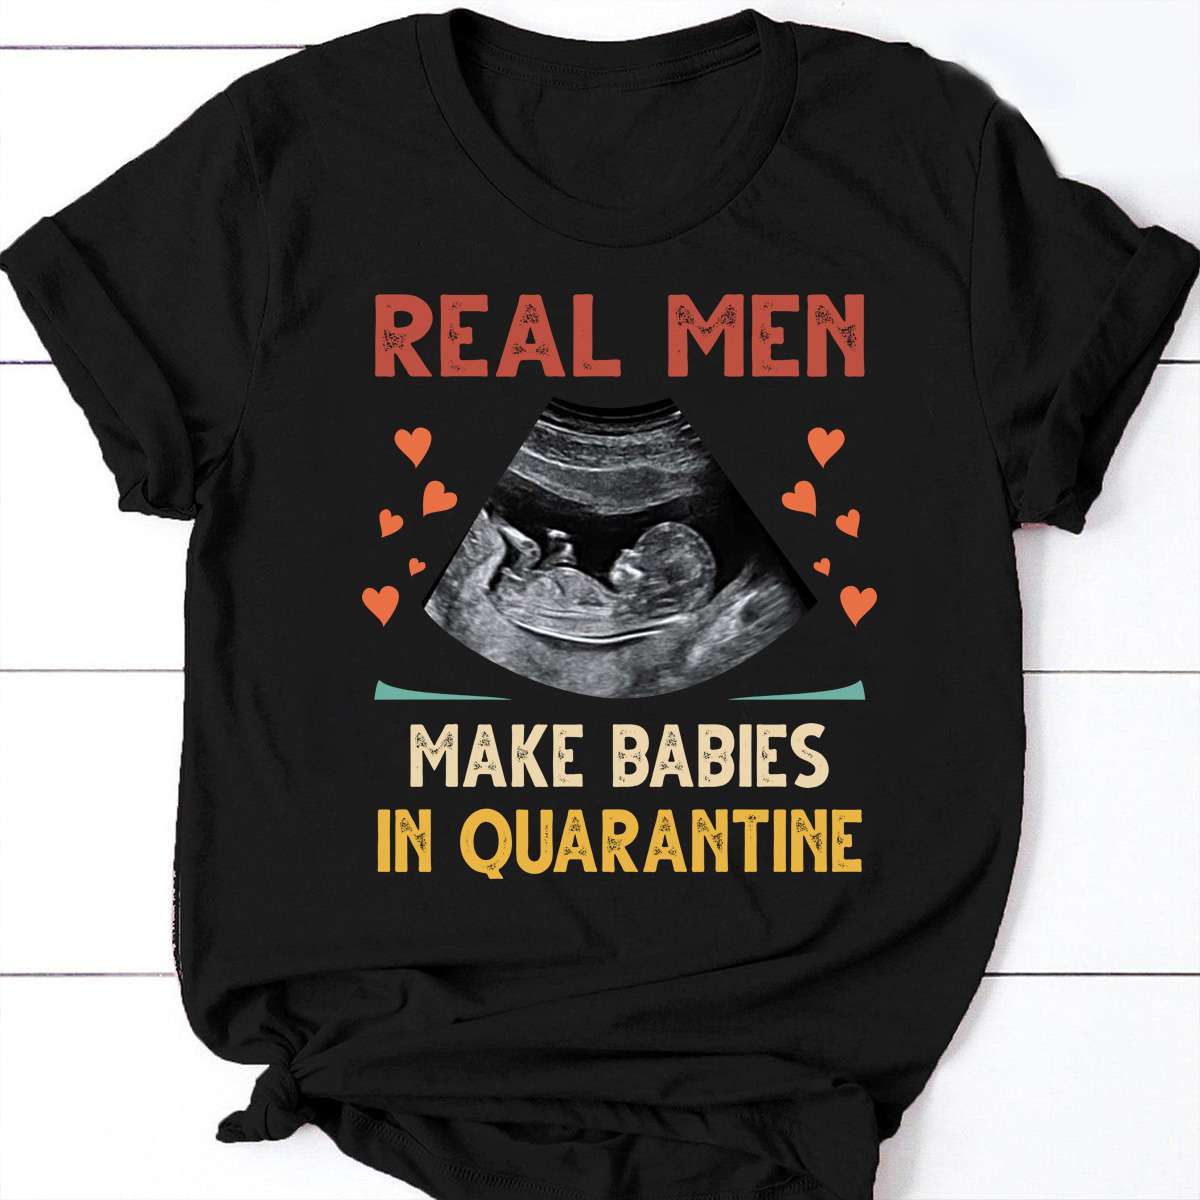 Real men make babies in quarantine - Mother pregnant, baby making